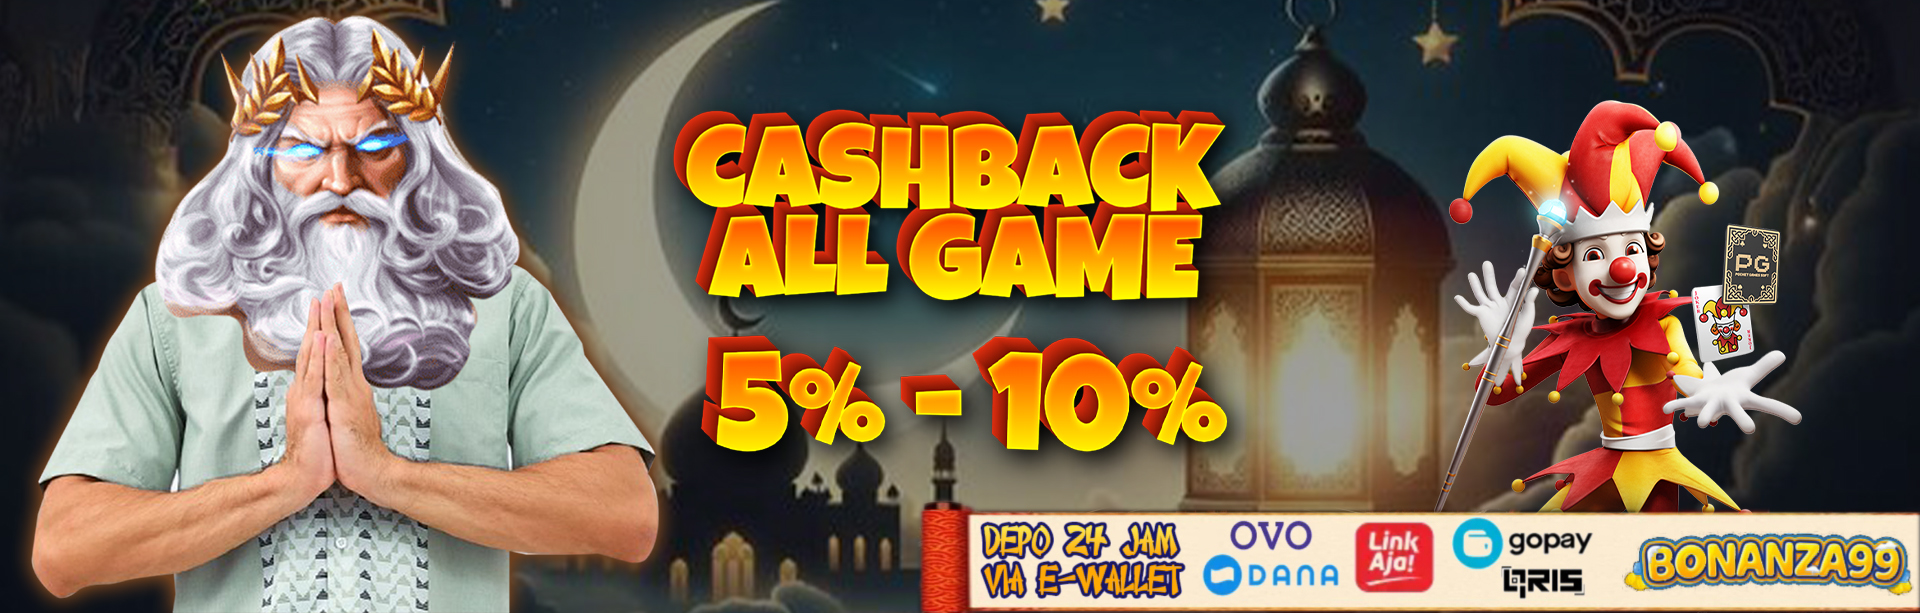 Cashback 5-10% All Game